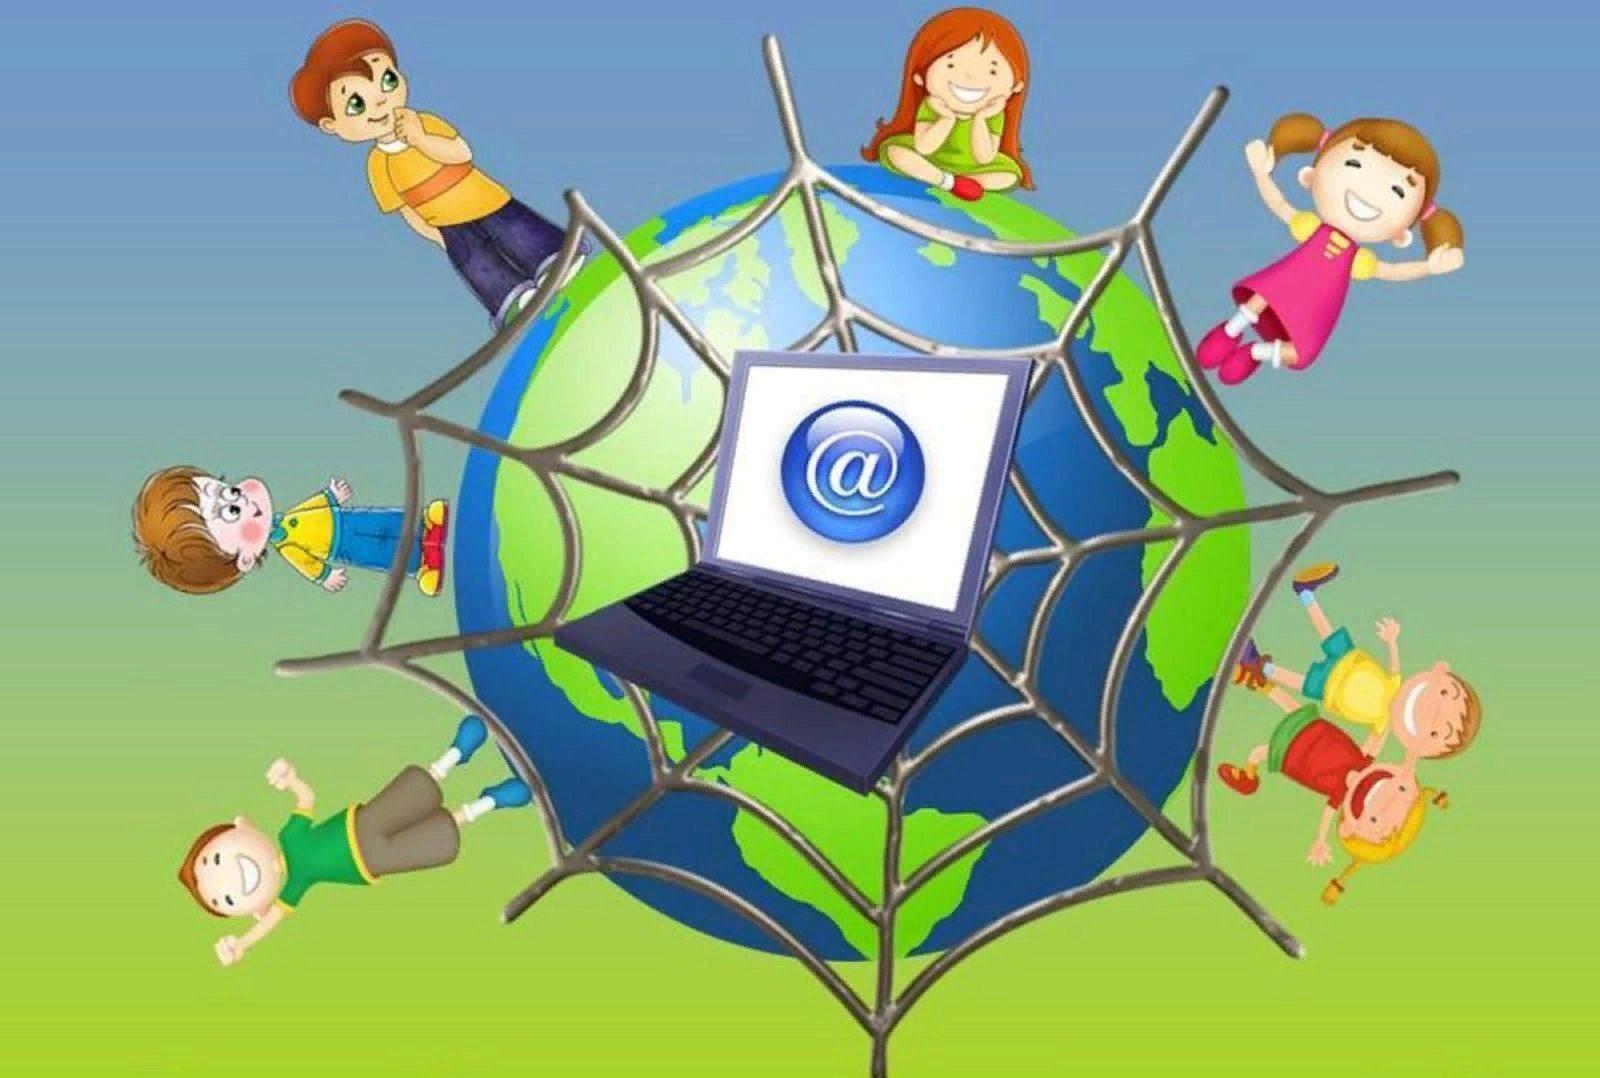 Мир сада интернет. Безопасный интернет. Безопасный интернет картинки. Безопасный интернет для детей. Безопасность детей в интернет пространстве.